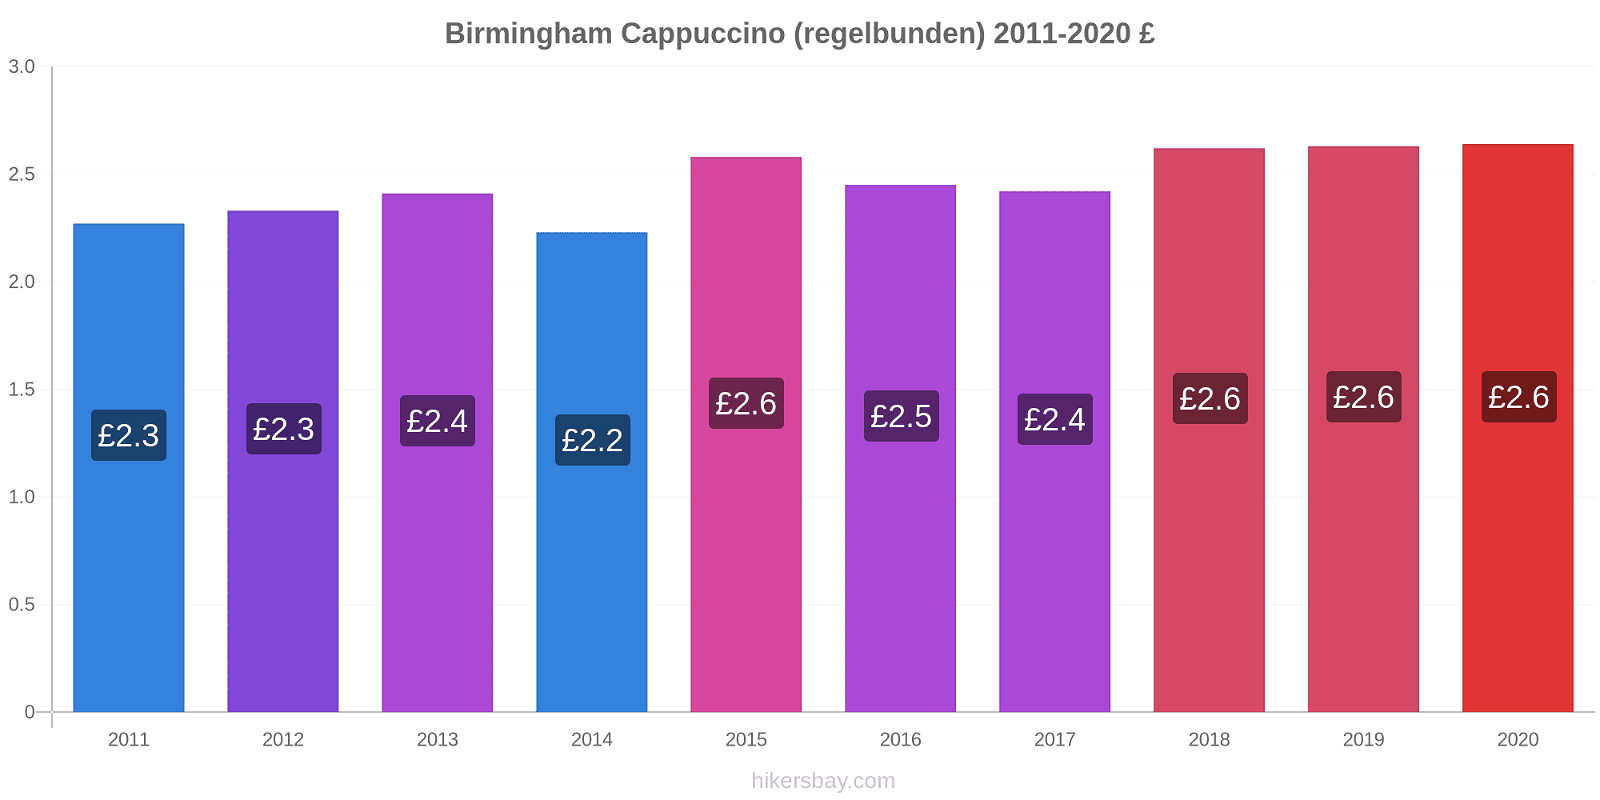 Birmingham prisförändringar Cappuccino (regelbunden) hikersbay.com